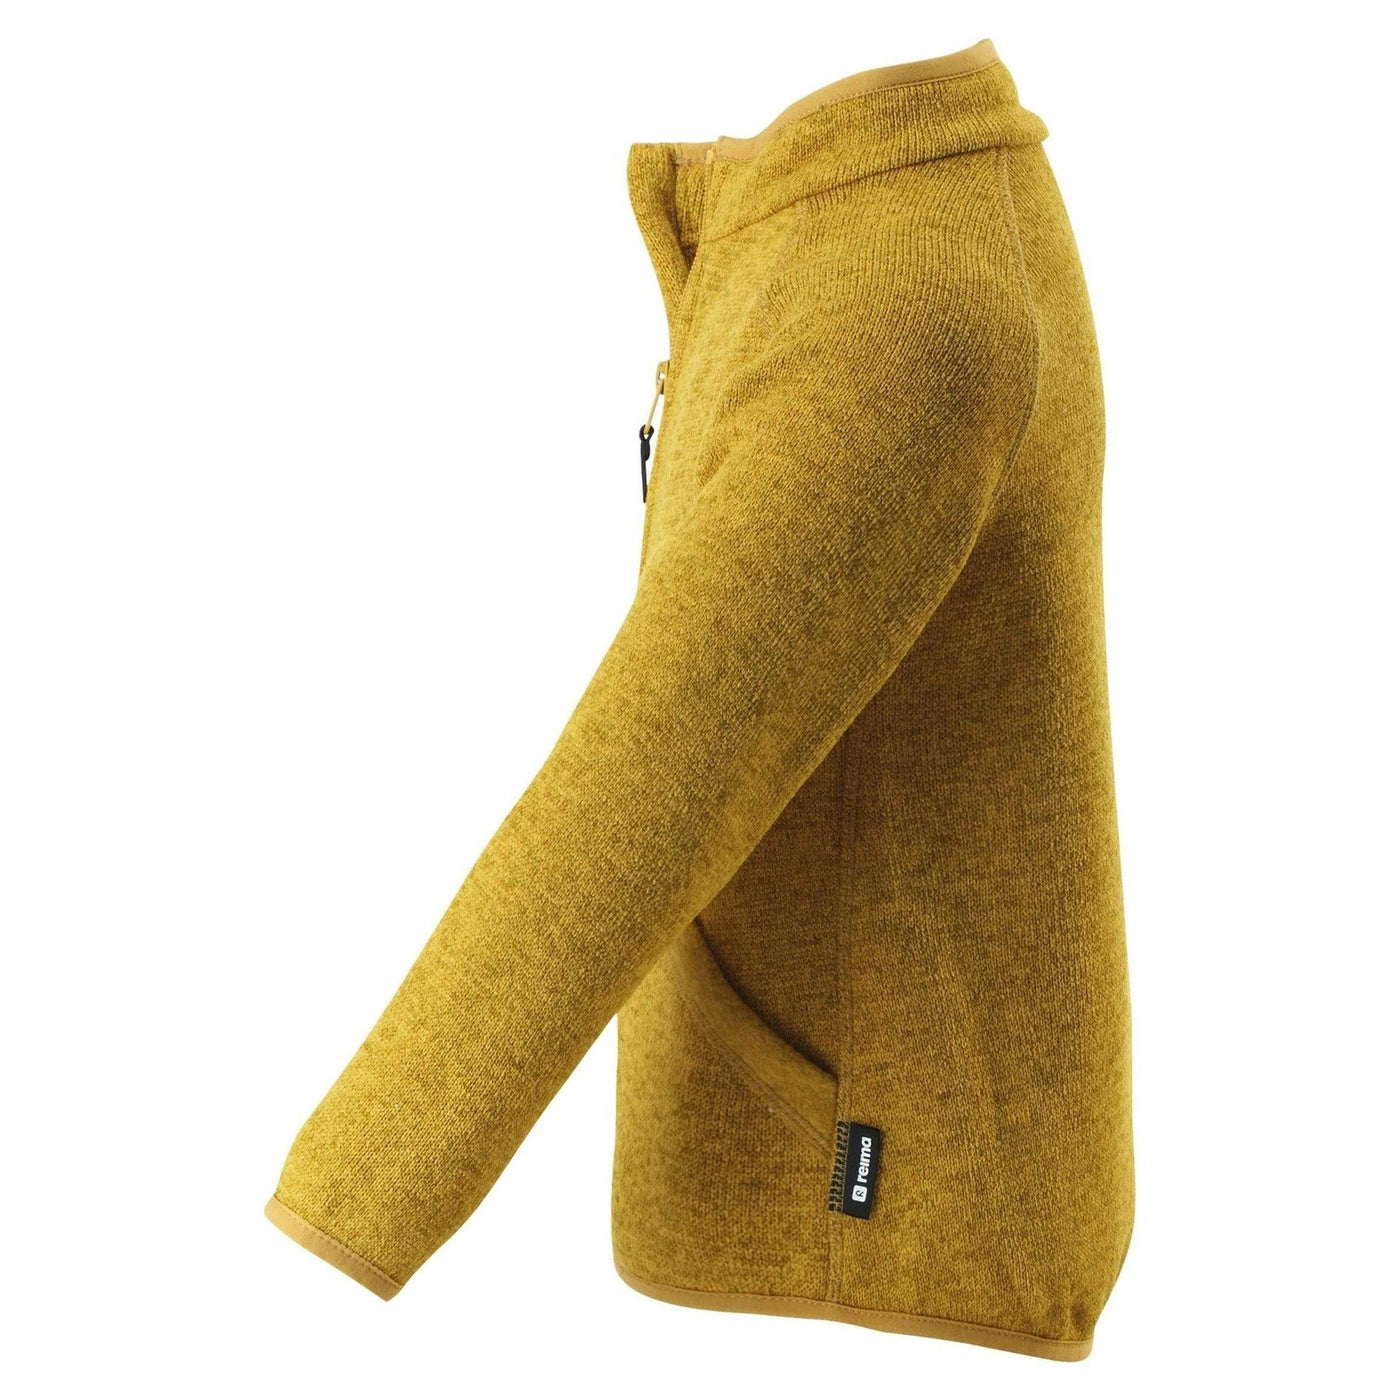 SnowKids Midlayers Reima Hopper Fleece Sweater - Mustard Yellow